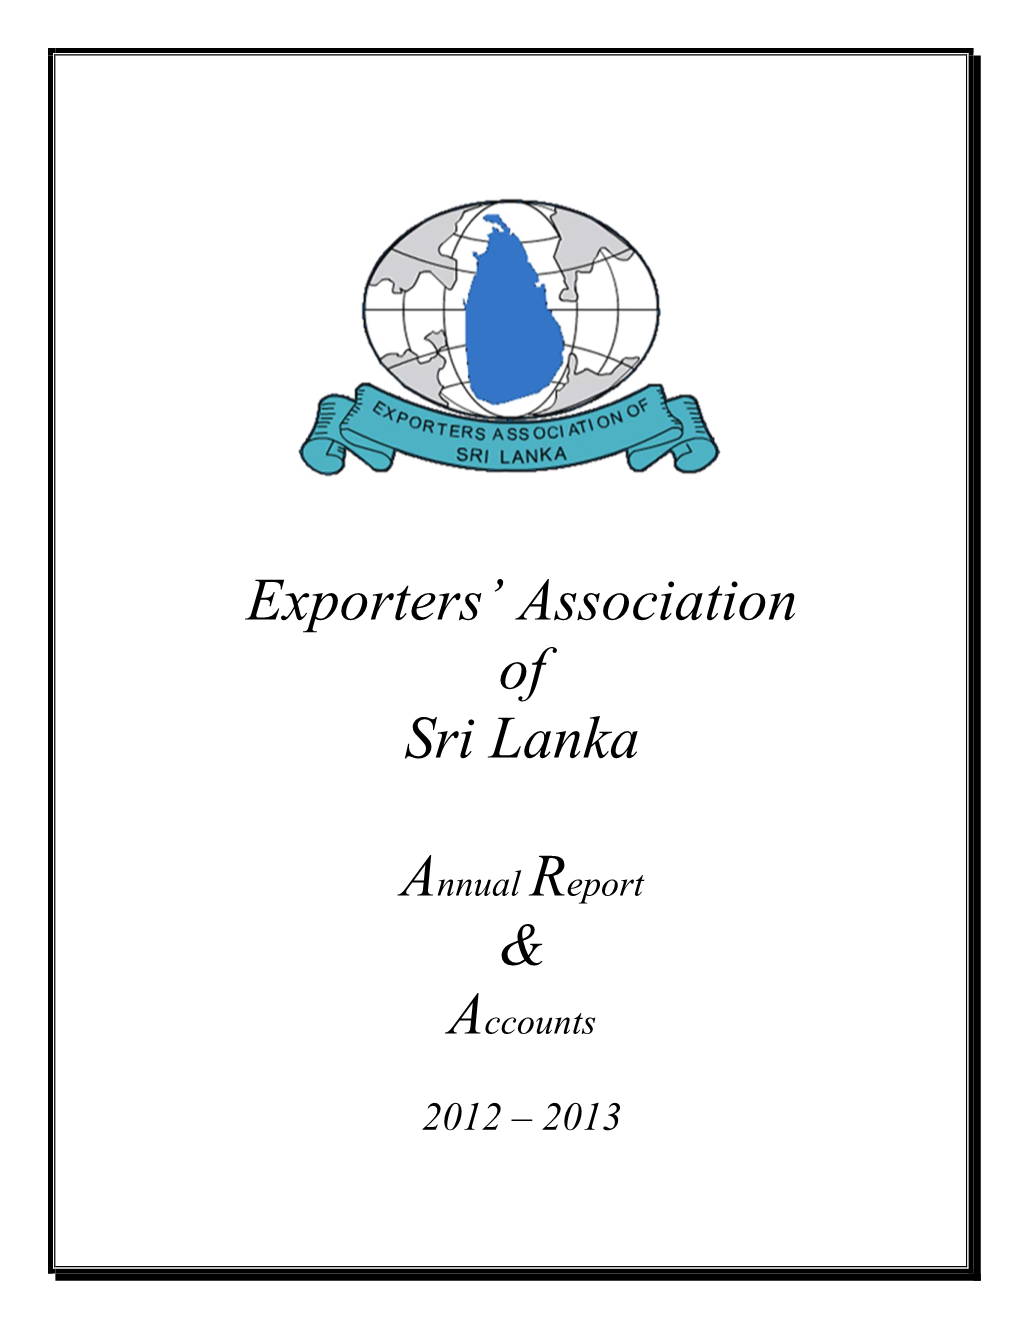 Exporters' Association of Sri Lanka Annual Report & Accounts